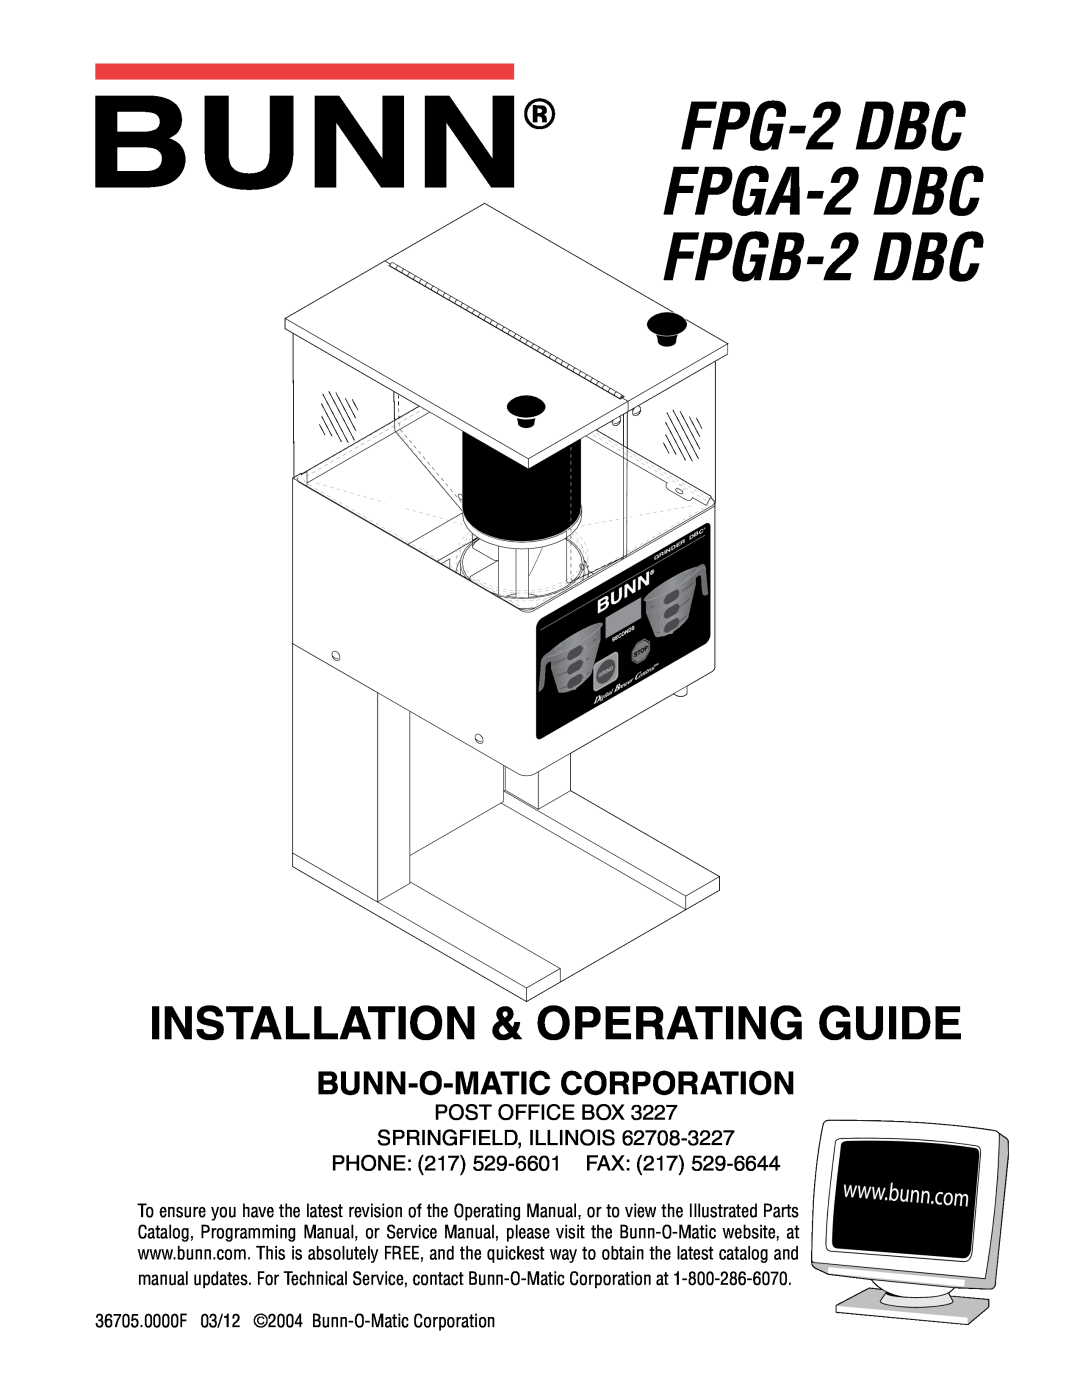 Bunn FPGB-2 DBC service manual FPG-2DBC FPGA-2DBC FPGB-2DBC, Installation & Operating Guide, Bunn-O-Maticcorporation 